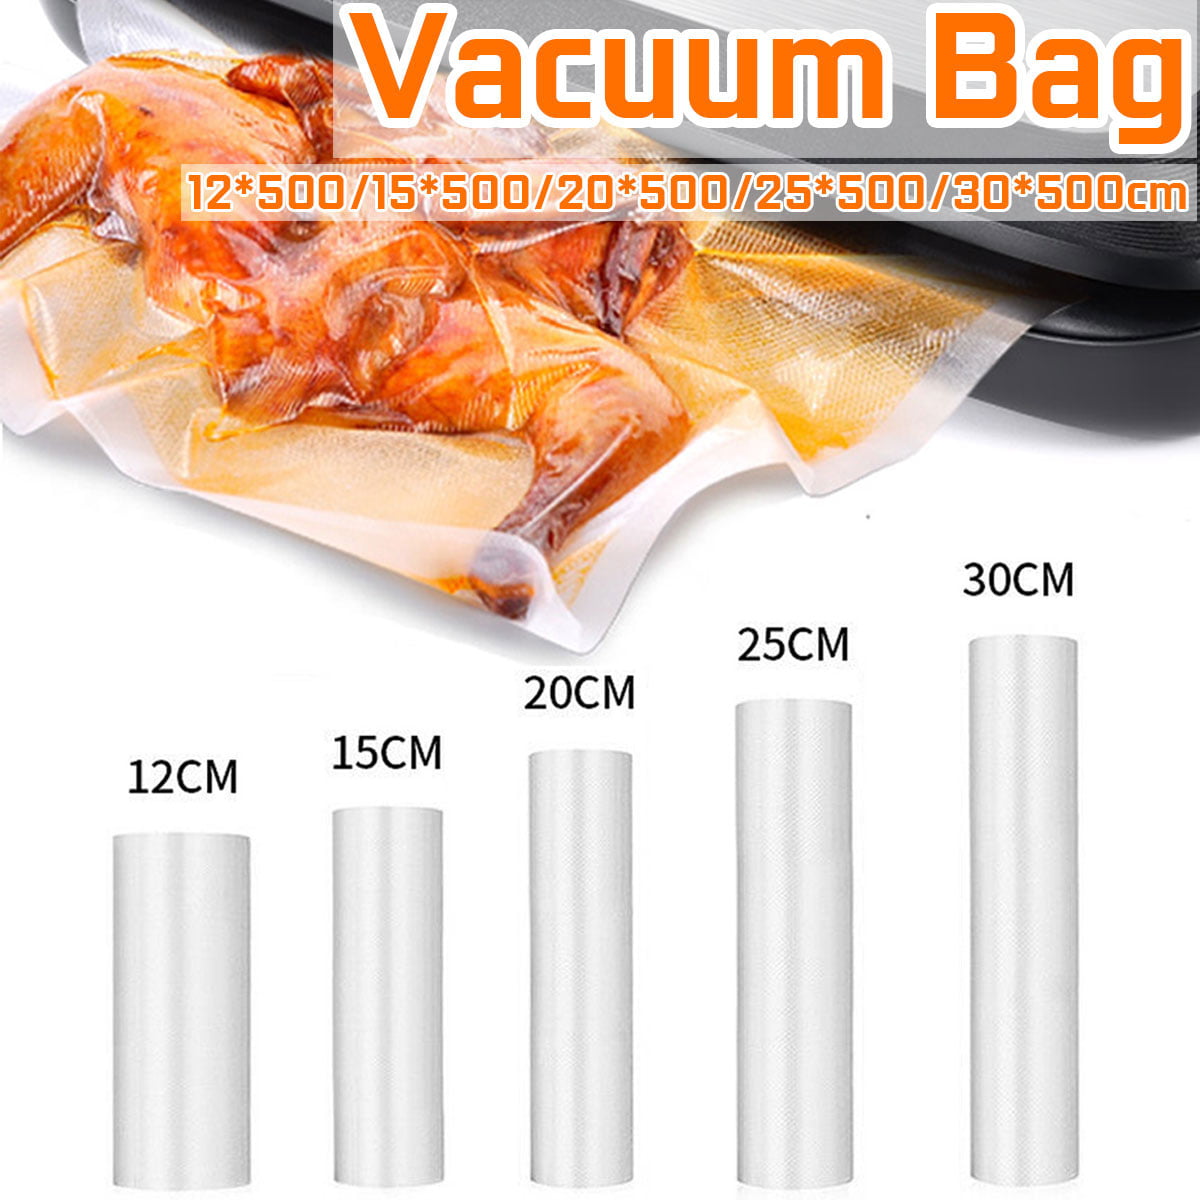 500CM HEAVY DUTY VACUUM SEALER BAG FOOD SEALER BAG FOR VAC STORAGE MEAL PREP 3F 